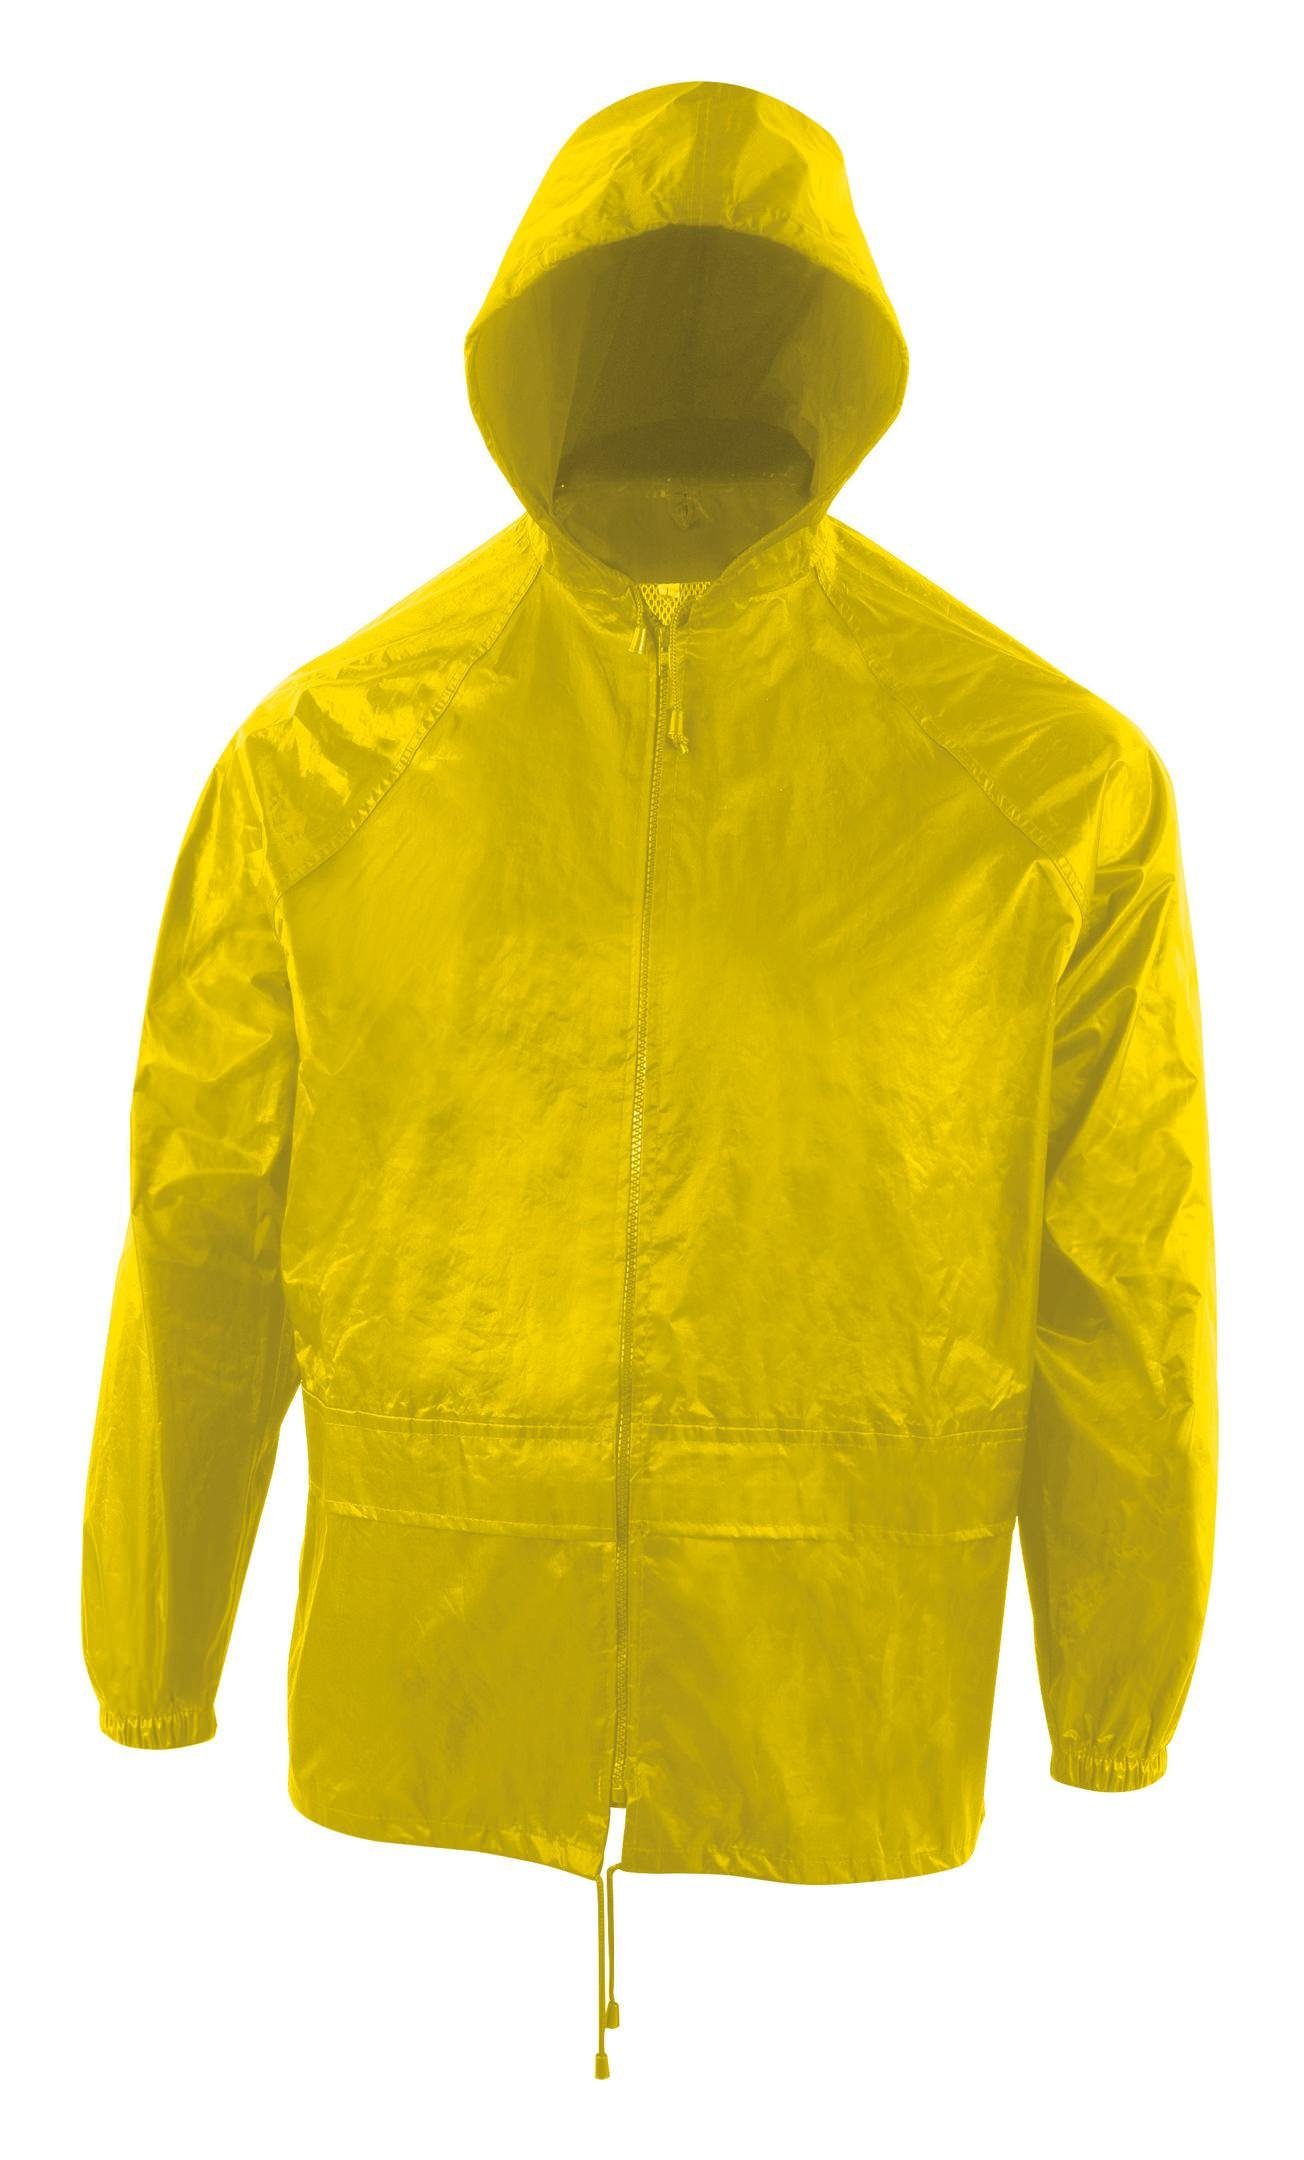 ASATEX Regenanzug, Regenset (Hose / Jacke) Größe S gelb